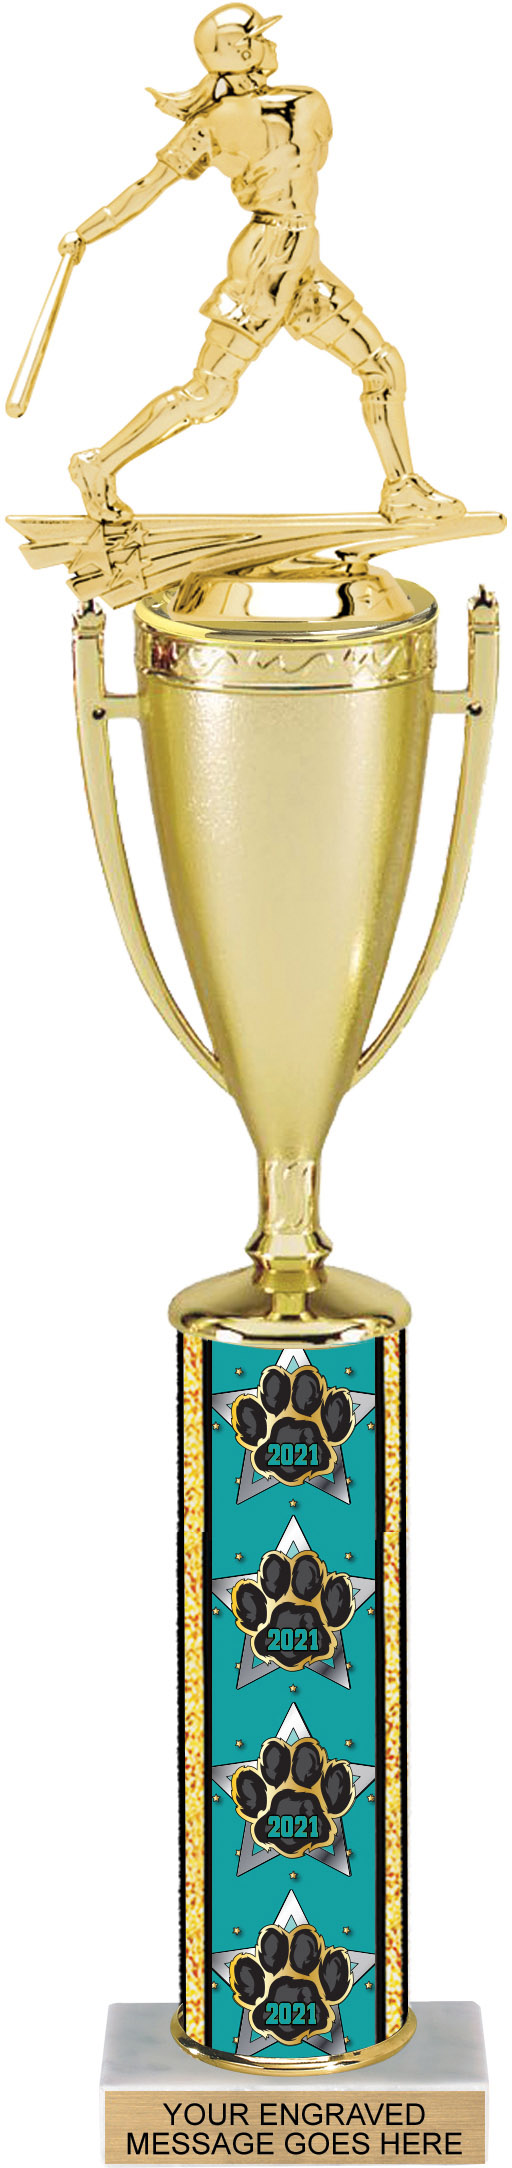 Year Paw Column Cup Trophy - 17 inch